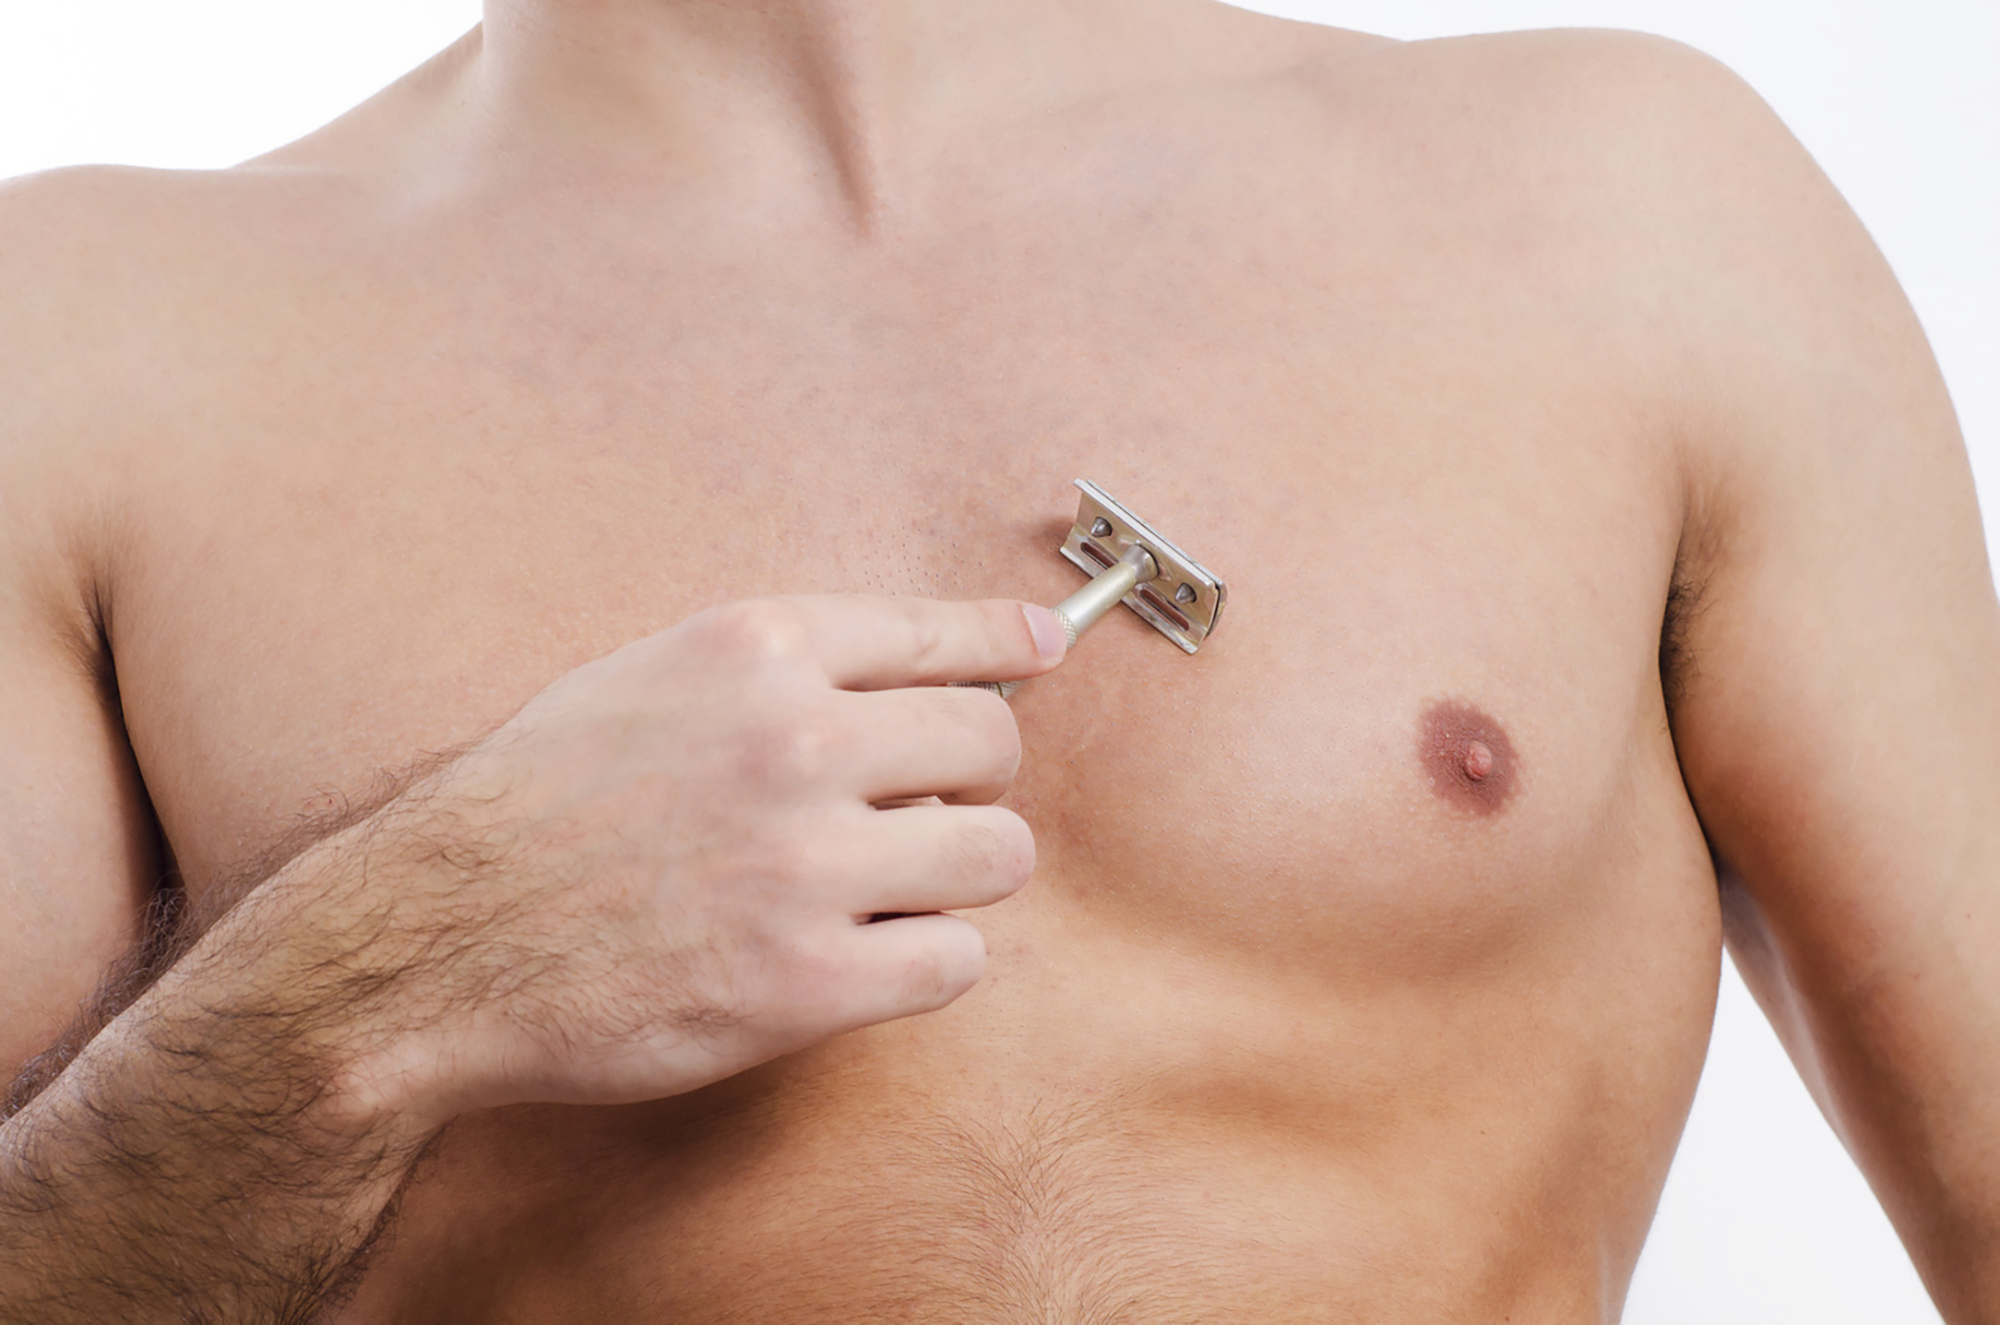 Man shaving his chest with razor, closeup of body